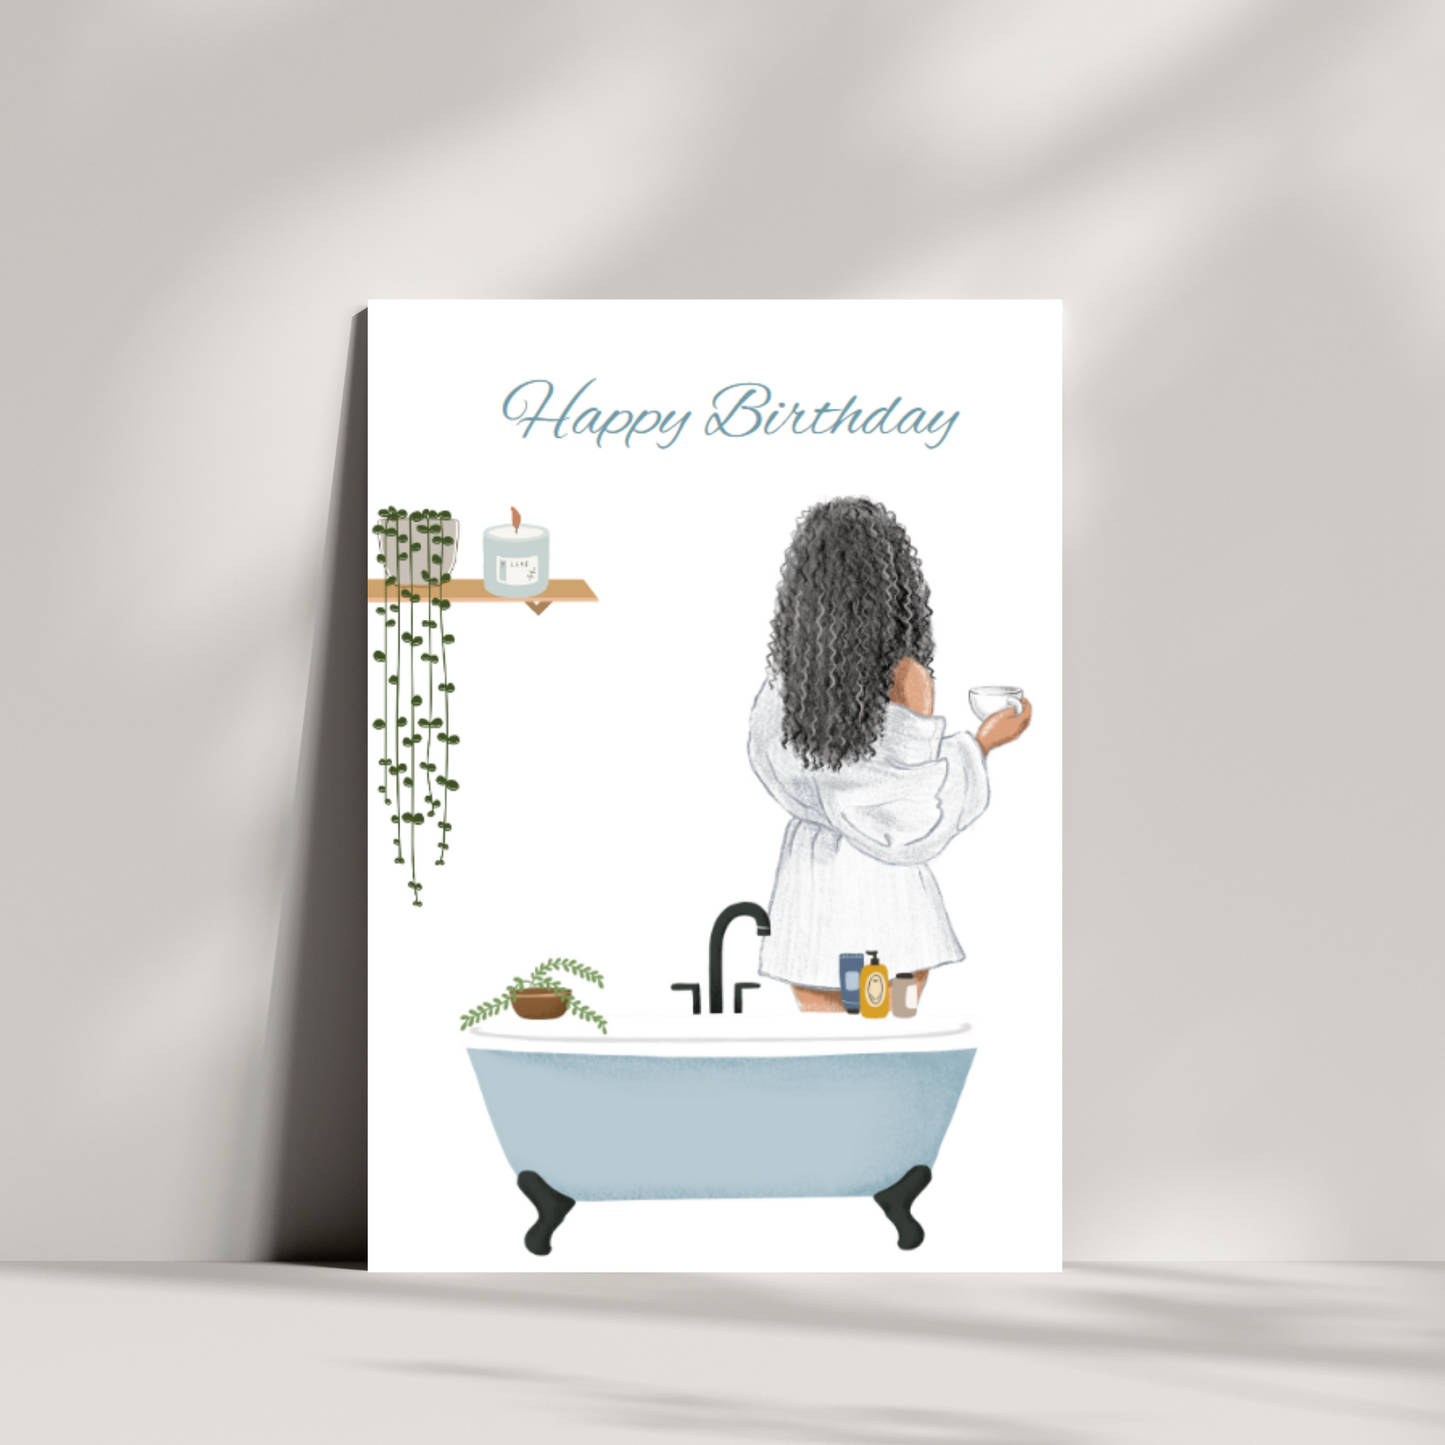 Relaxing bath birthday card